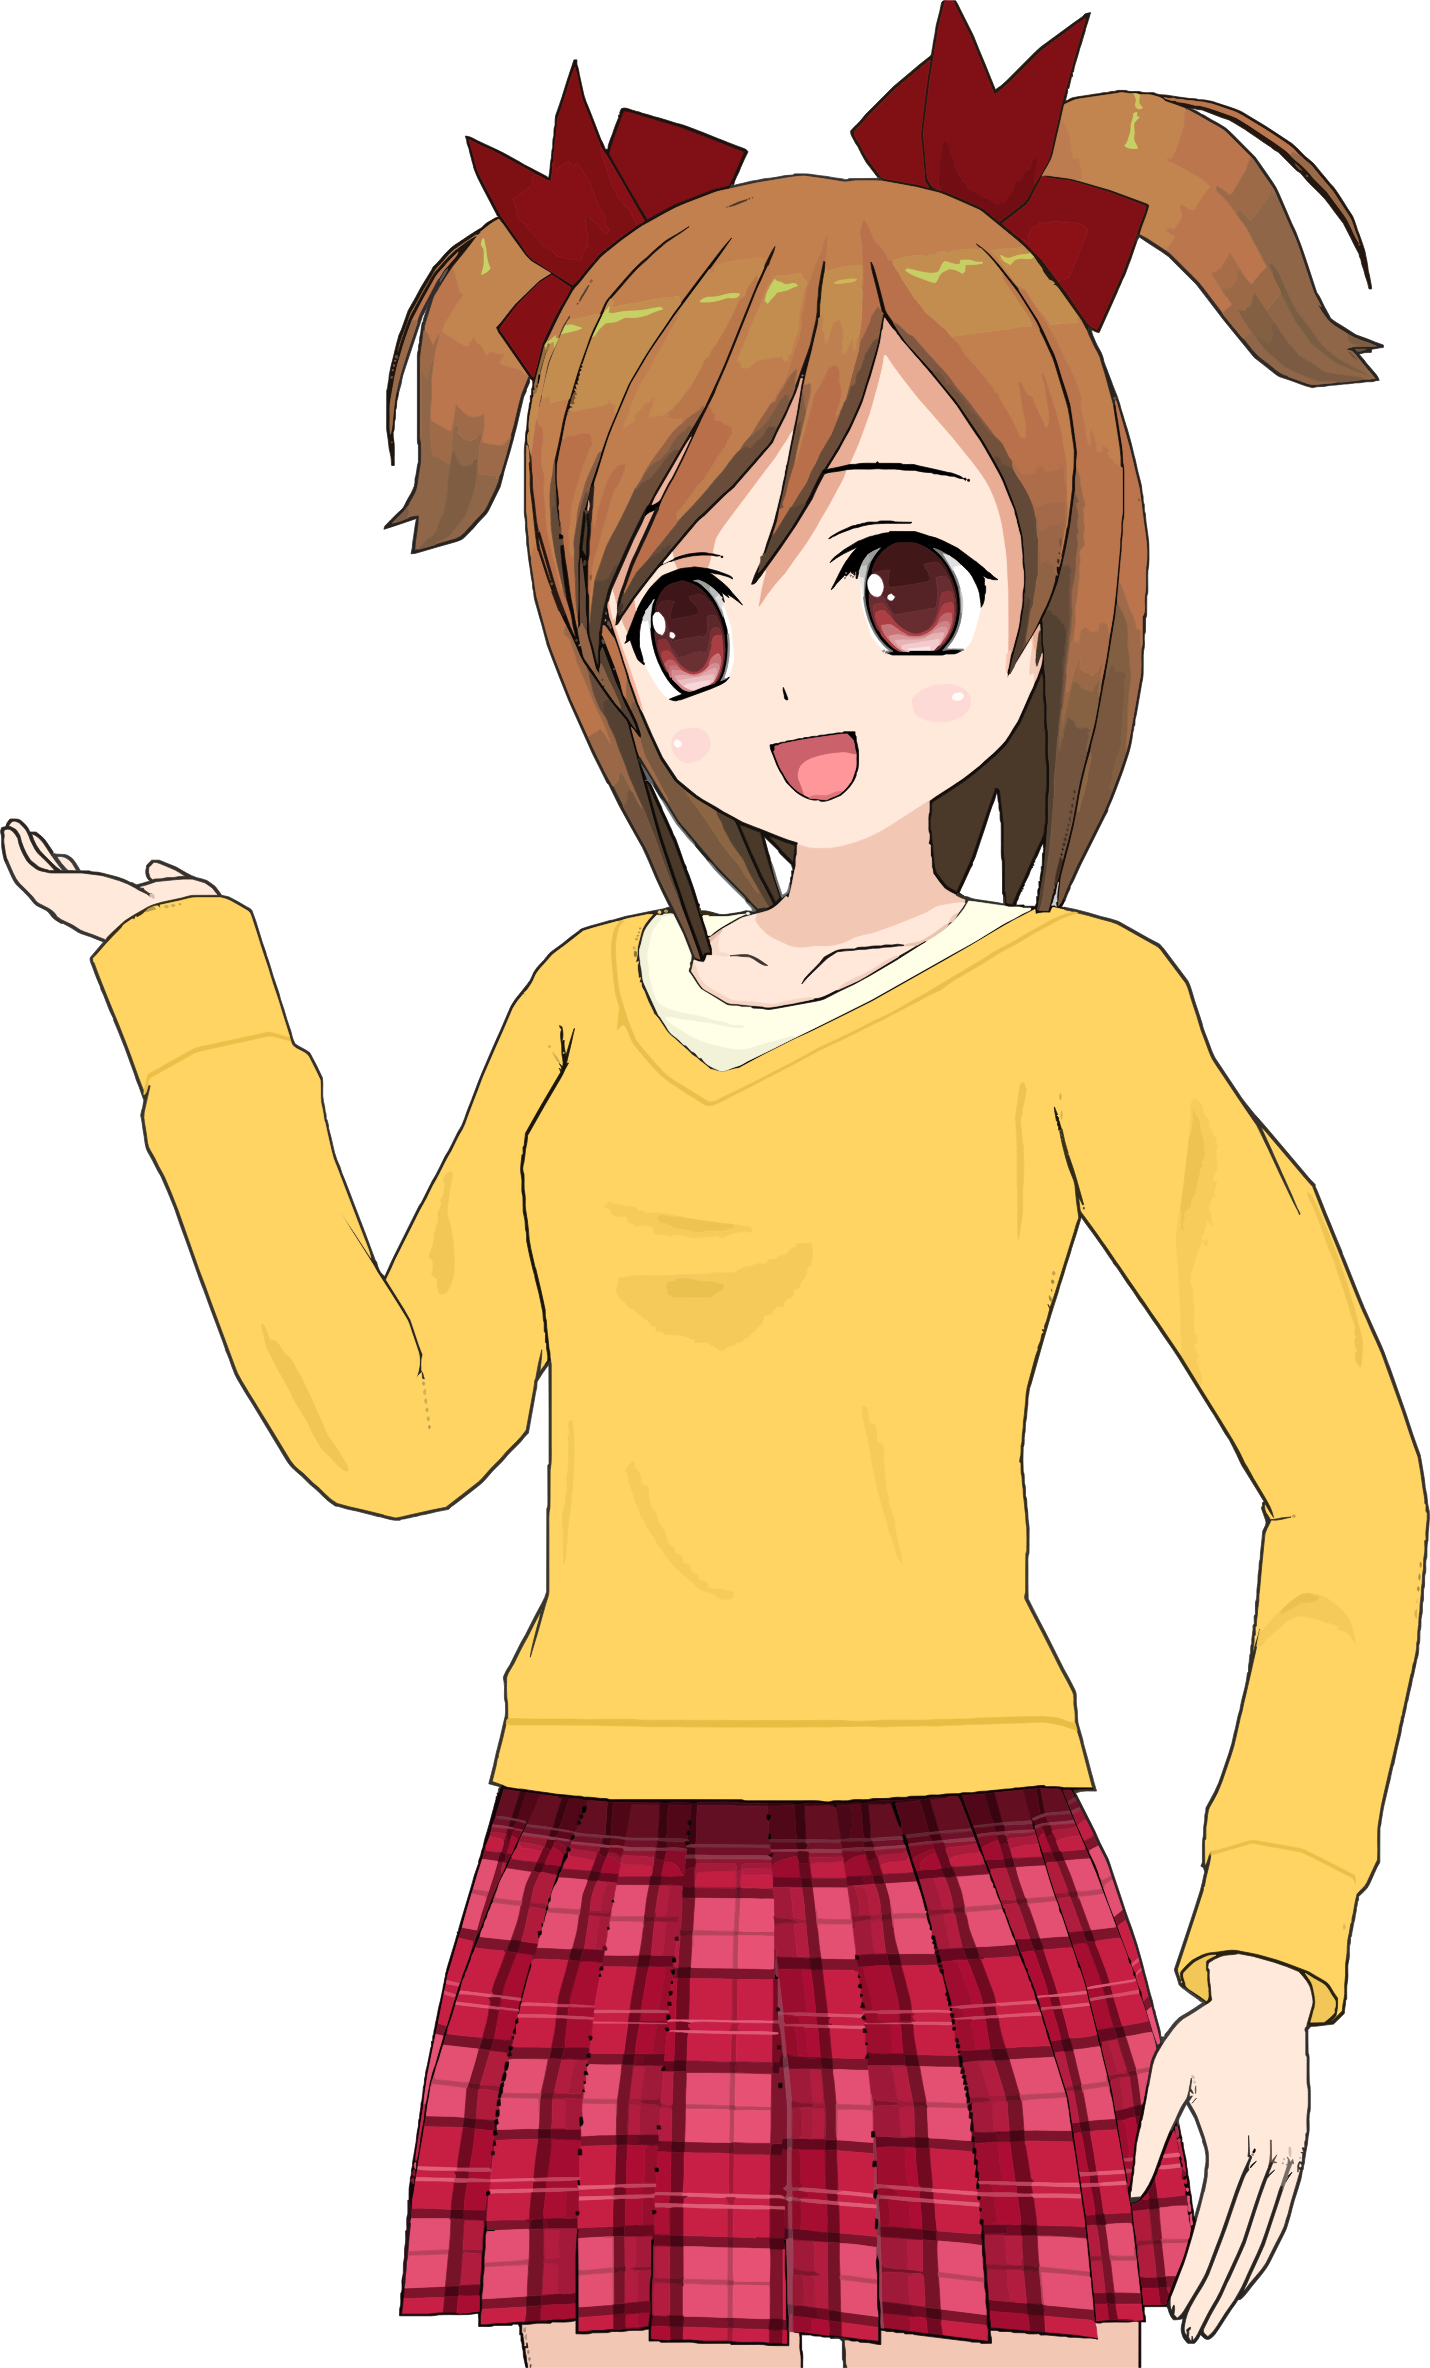 Anime girl big image. Clipart shirt orange shirt